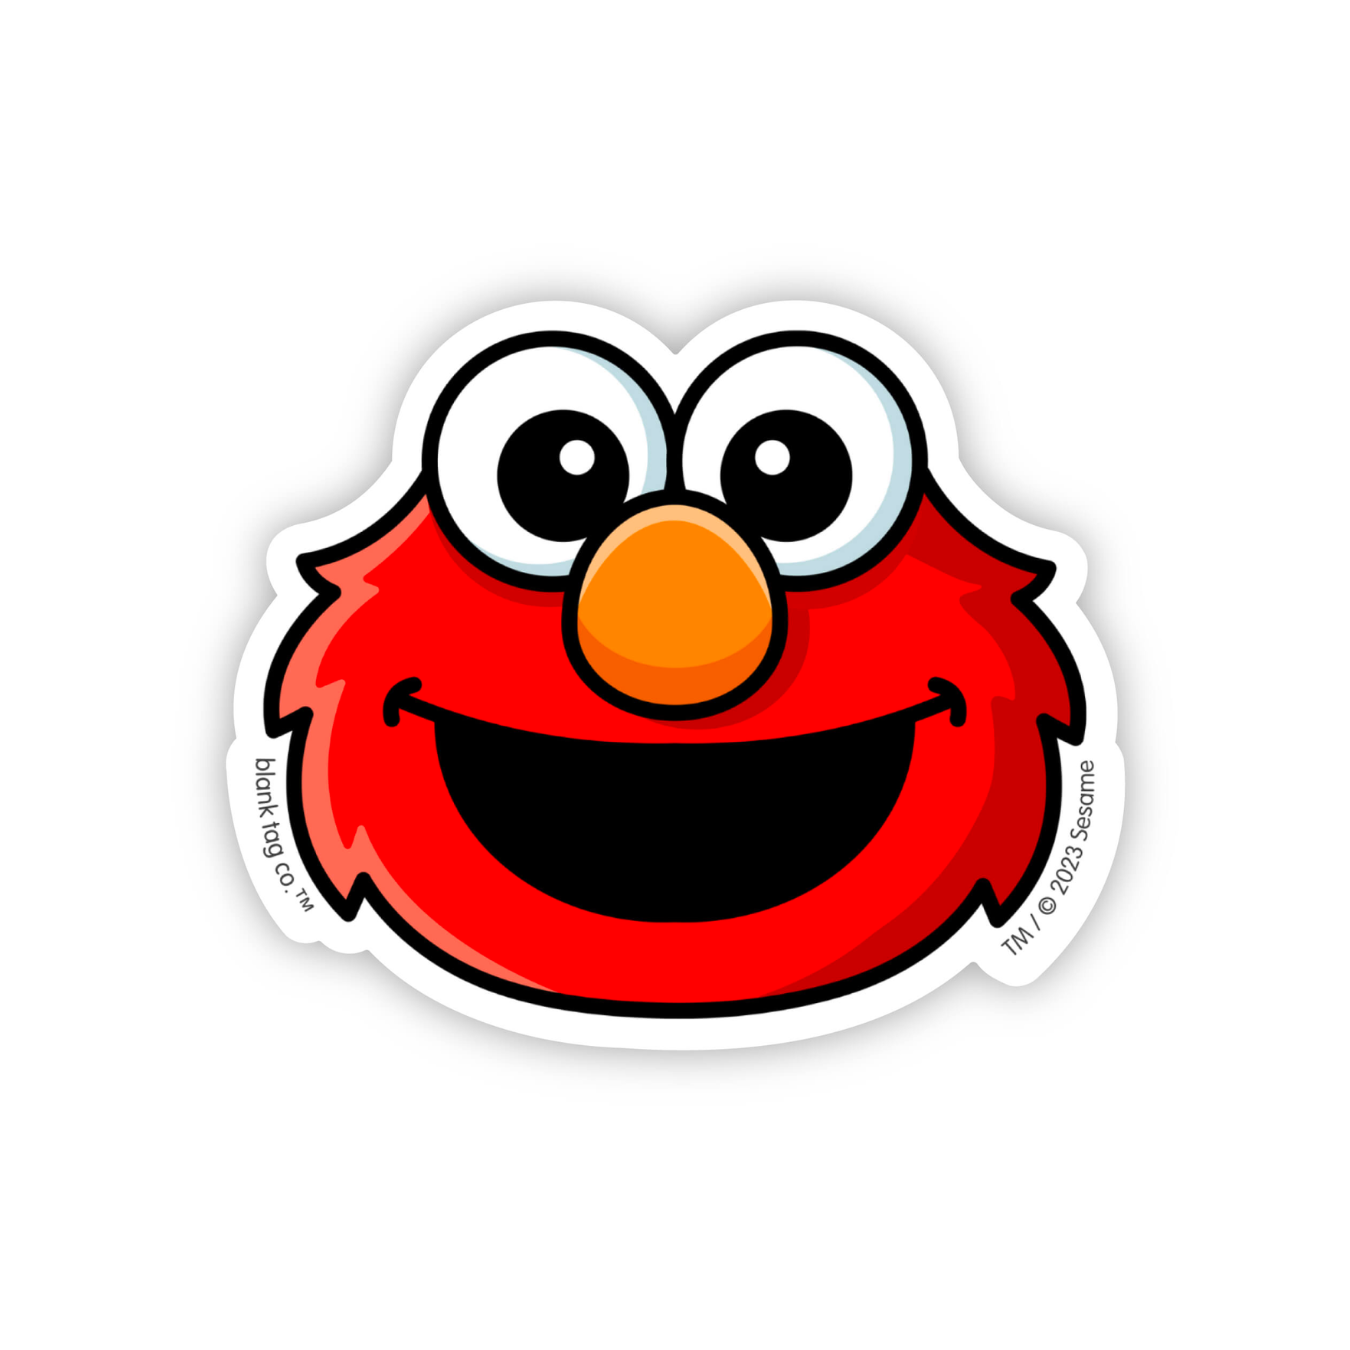 The Elmo Face Sticker